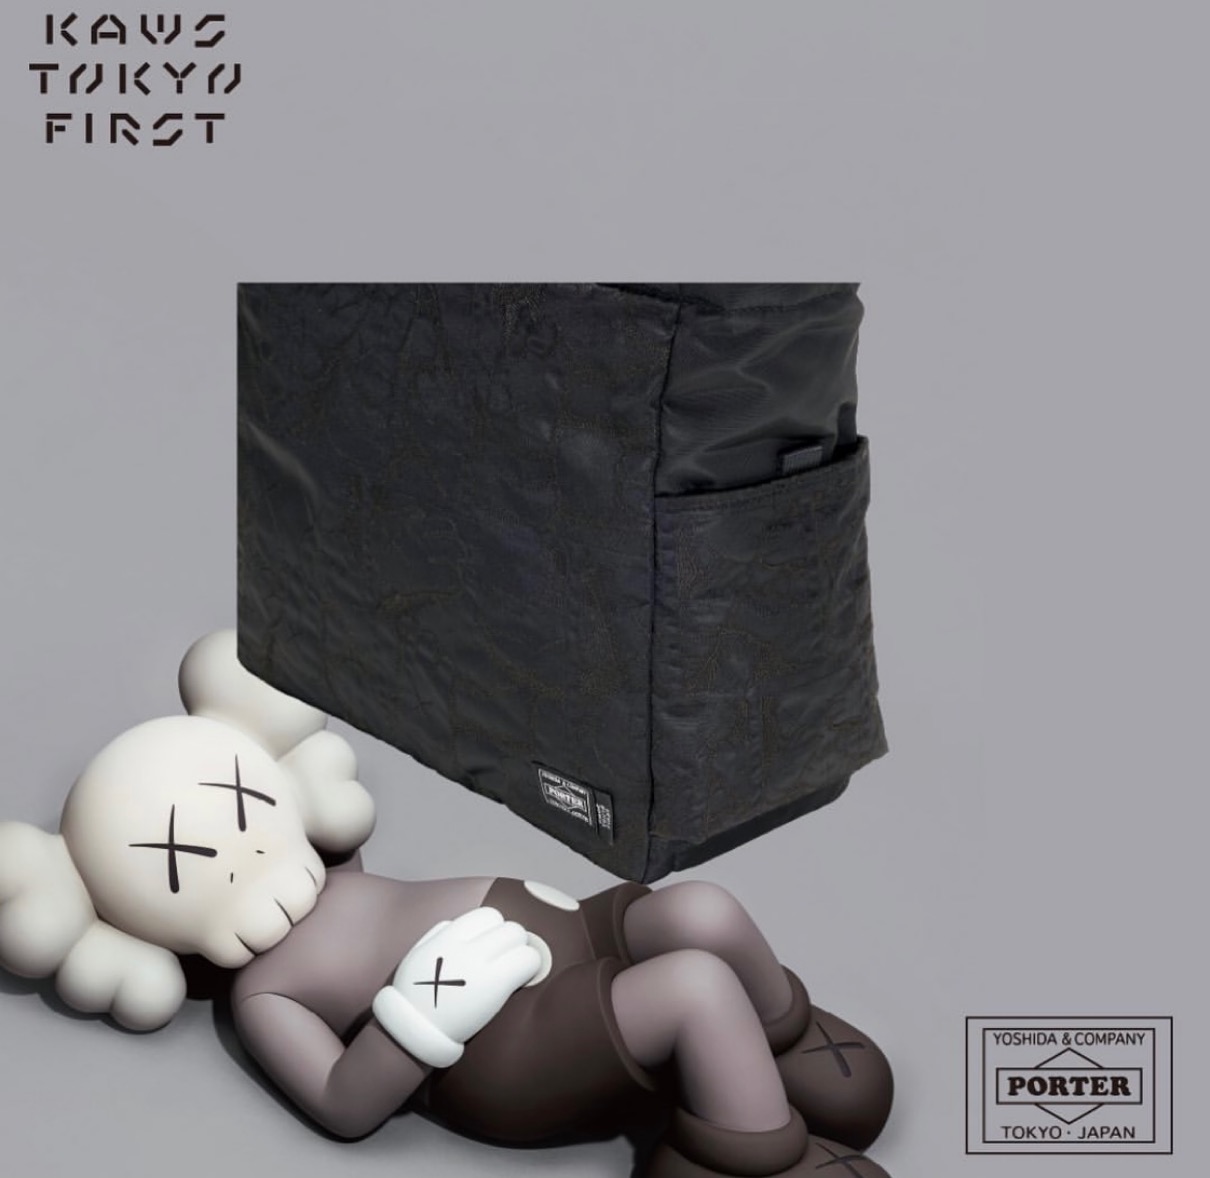 KAWS TOKYO FIRST × PORTER】限定コラボアイテムが8月1日に発売予定 